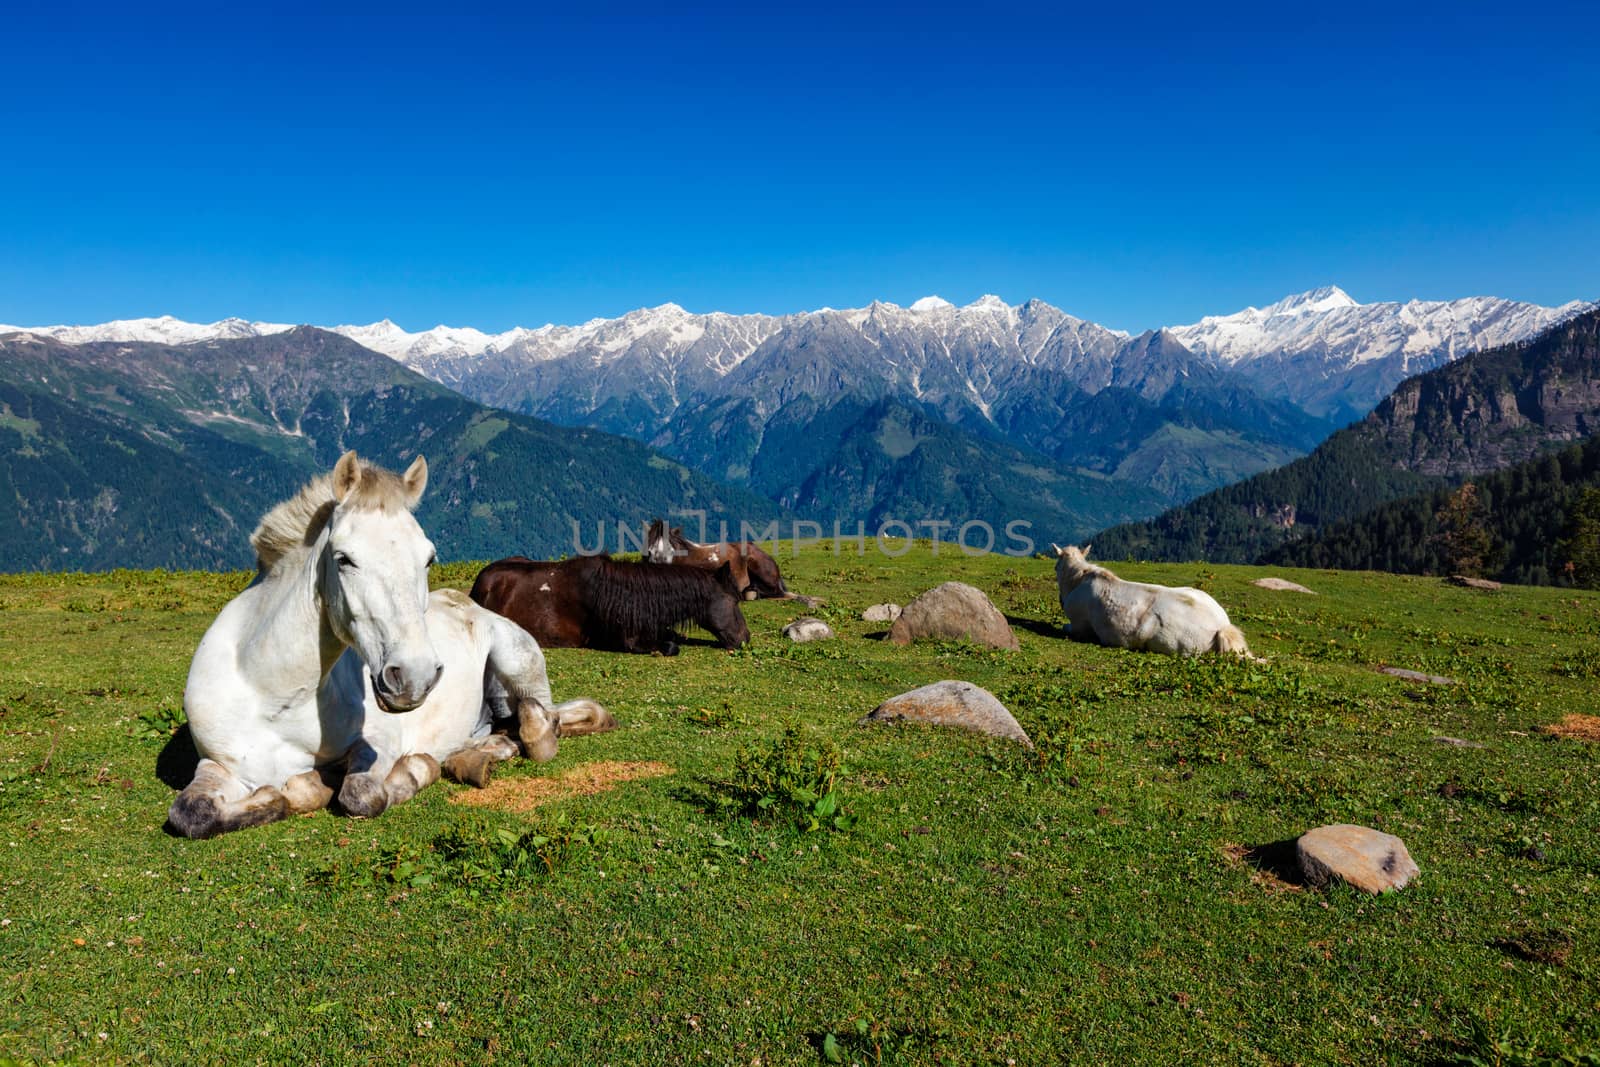 Horses grazing in Himalayas mountains. Himachal Pradesh, India